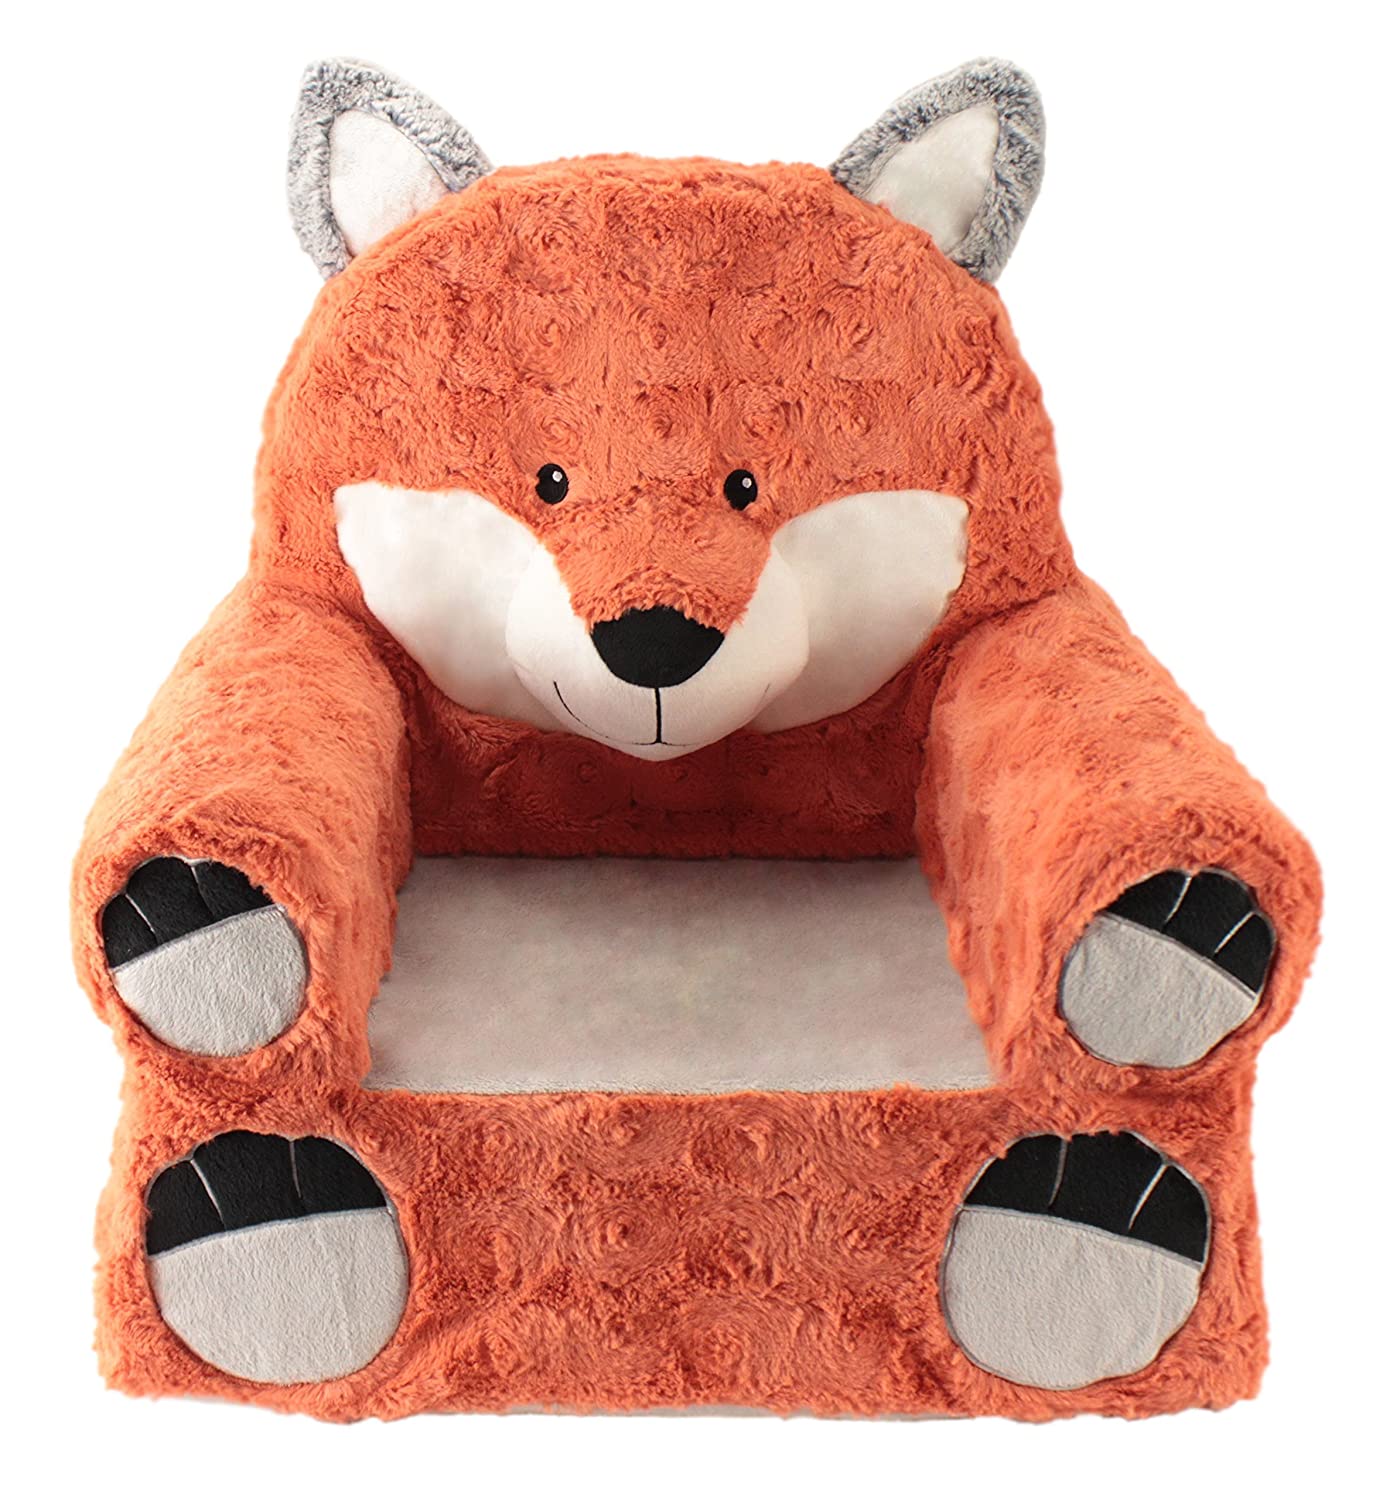 Animal Adventure Sweet SeatsOrange Fox Children's ChairLarge SizeMachine Washable Cover